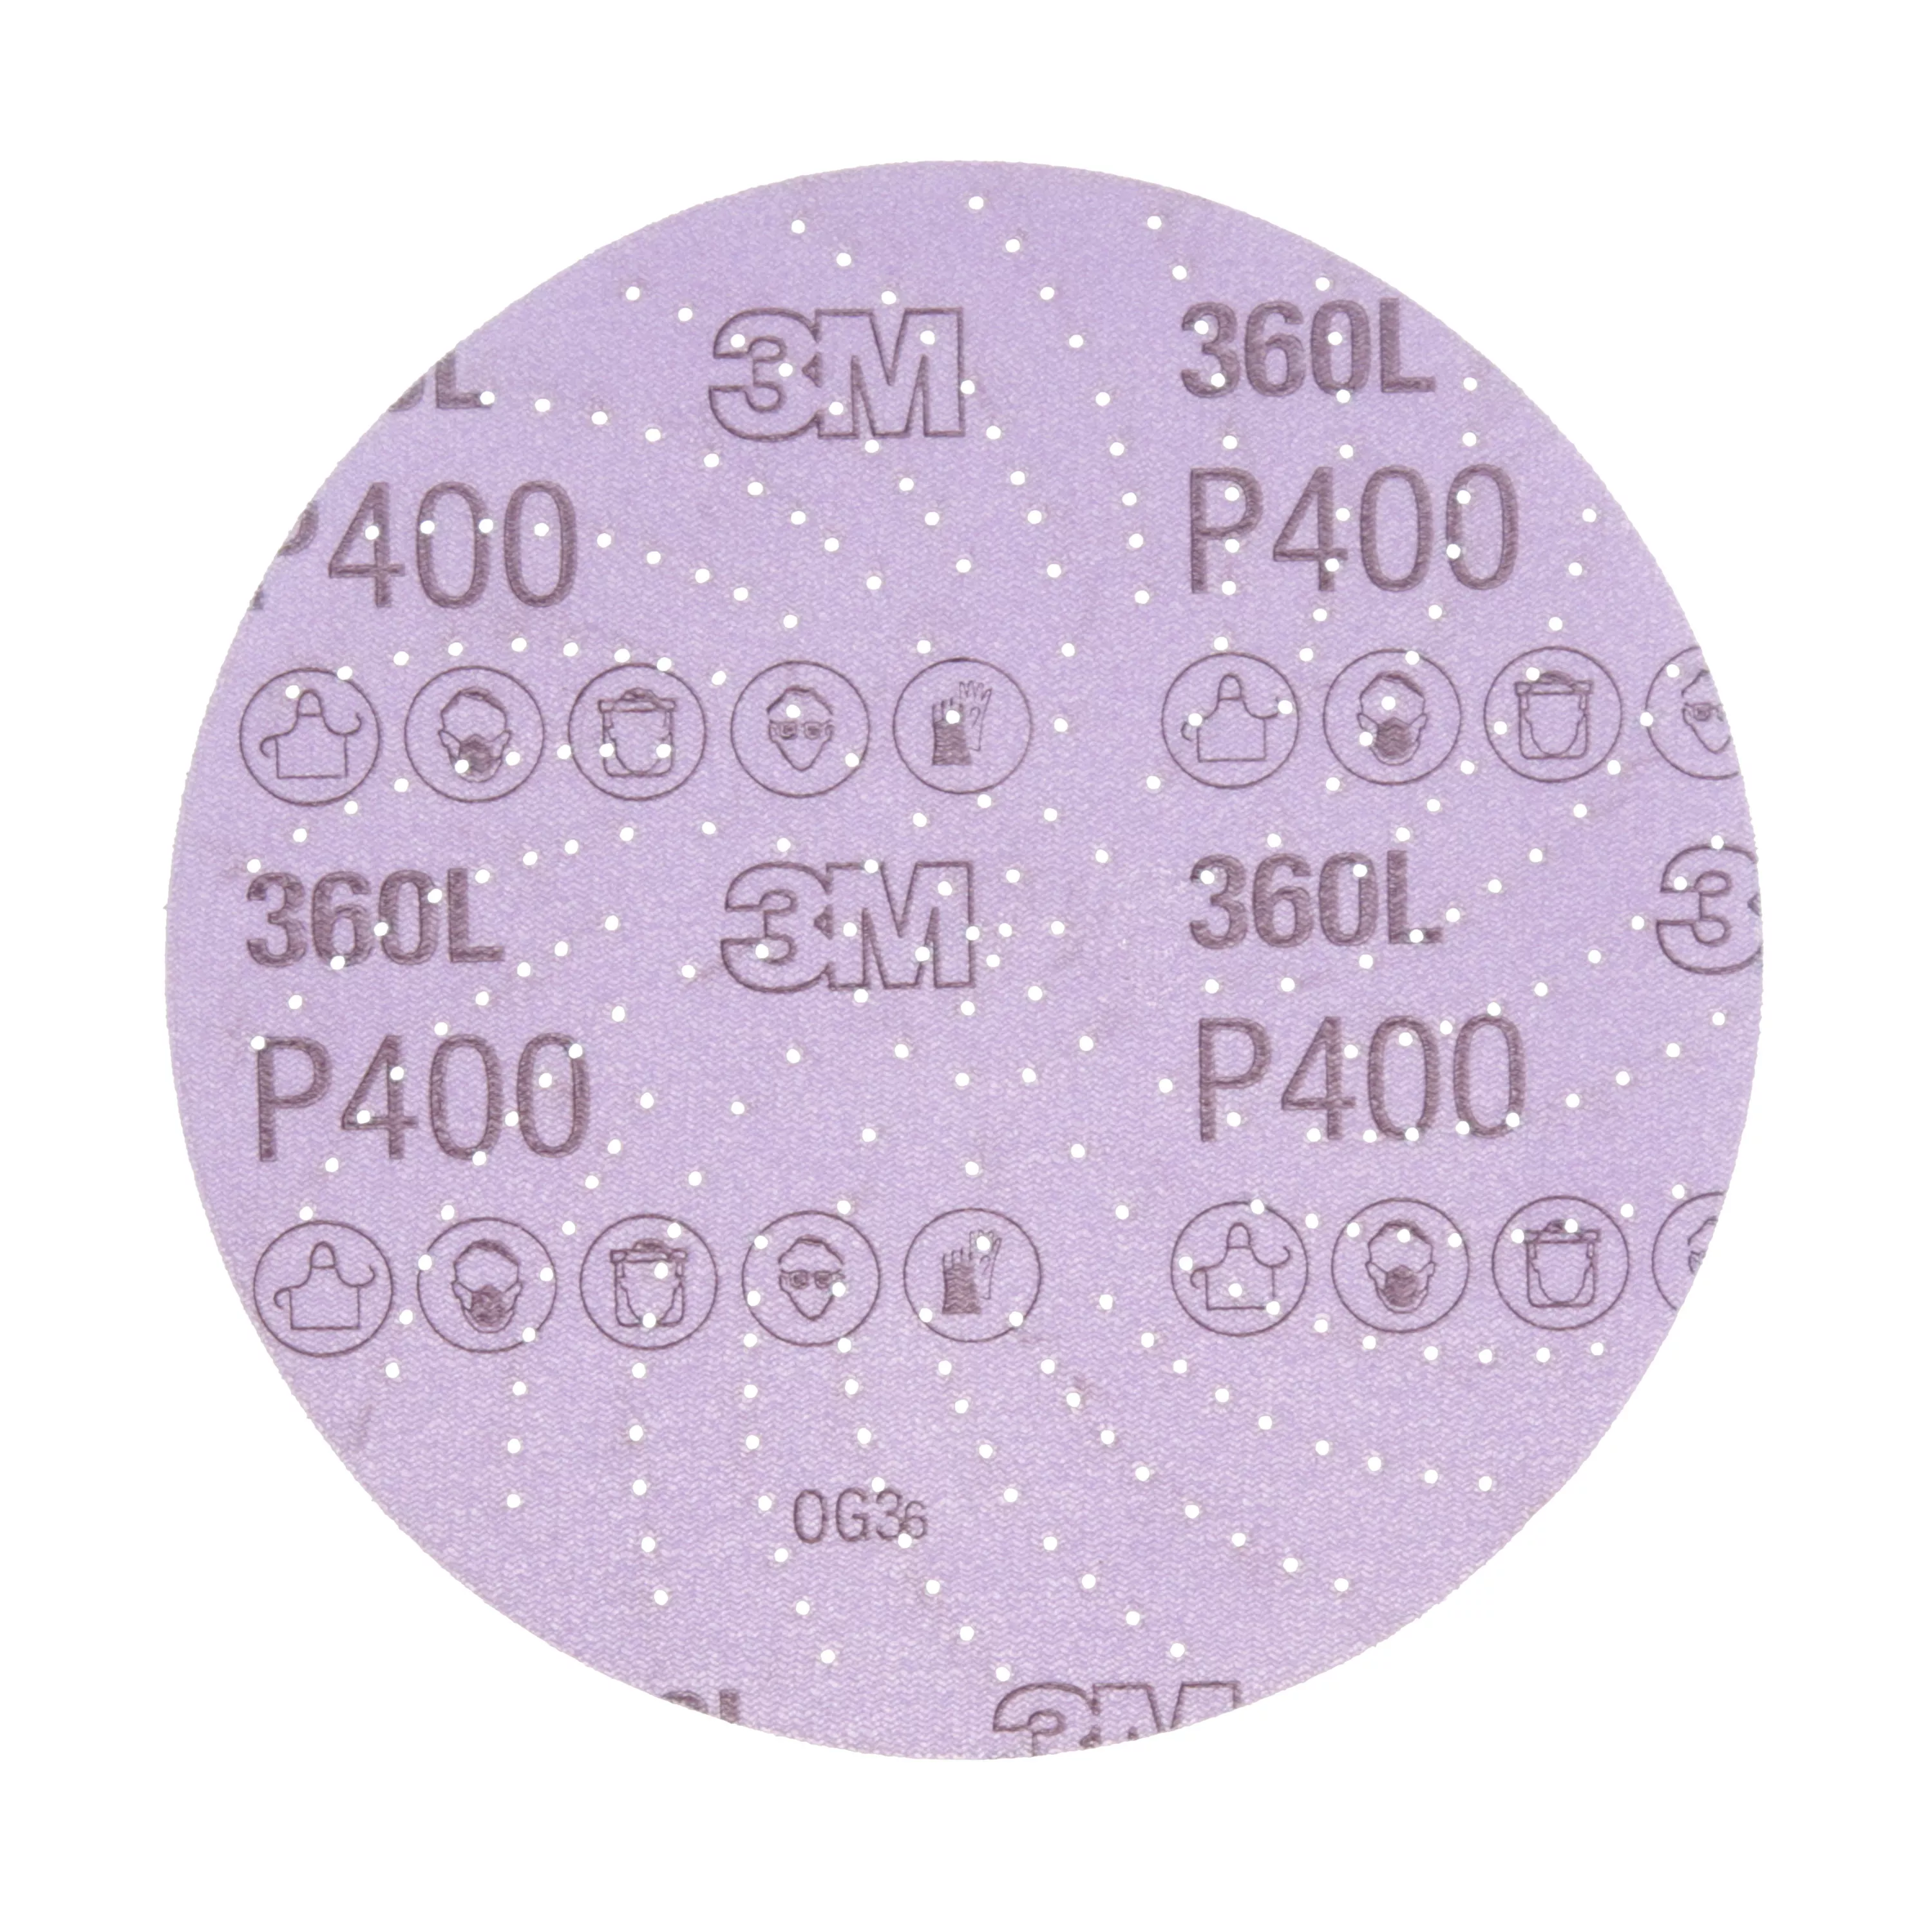 3M Xtract™ Film Disc 360L, P400 3MIL, 6 in, Die 600LG, 100/Carton, 500
ea/Case